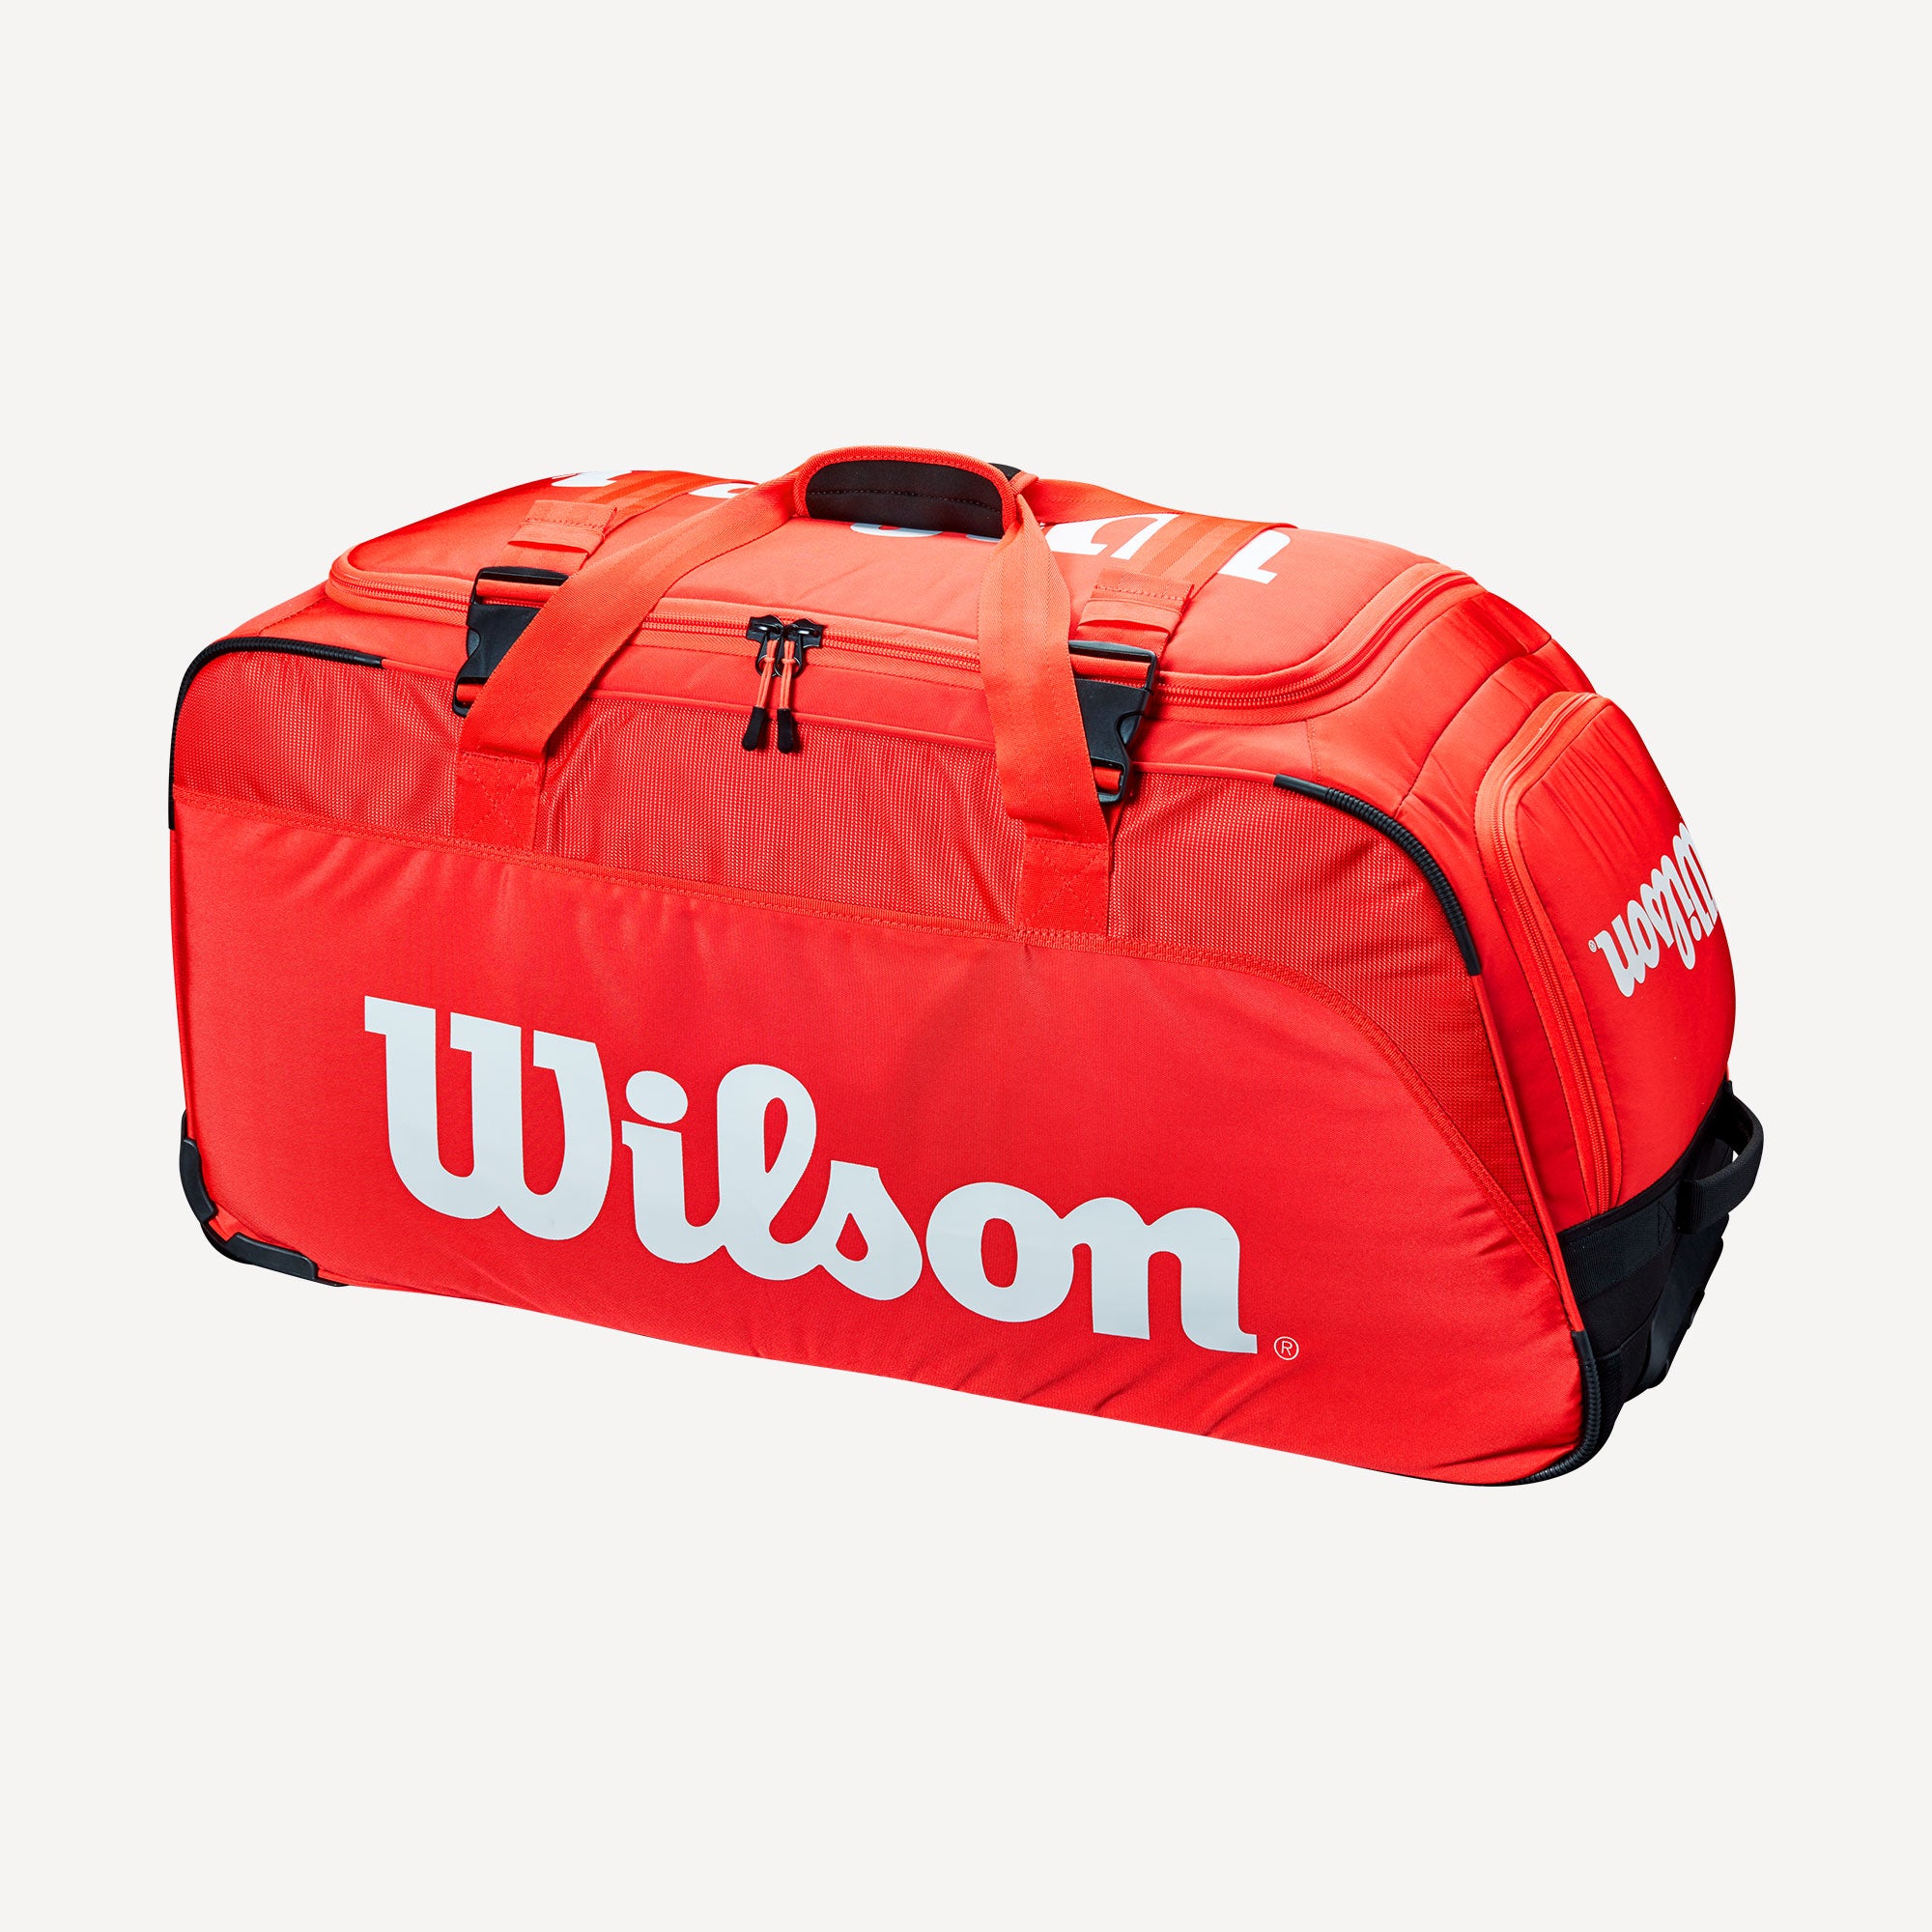 Wilson Super Tour Tennis Travel Bag Red (2)